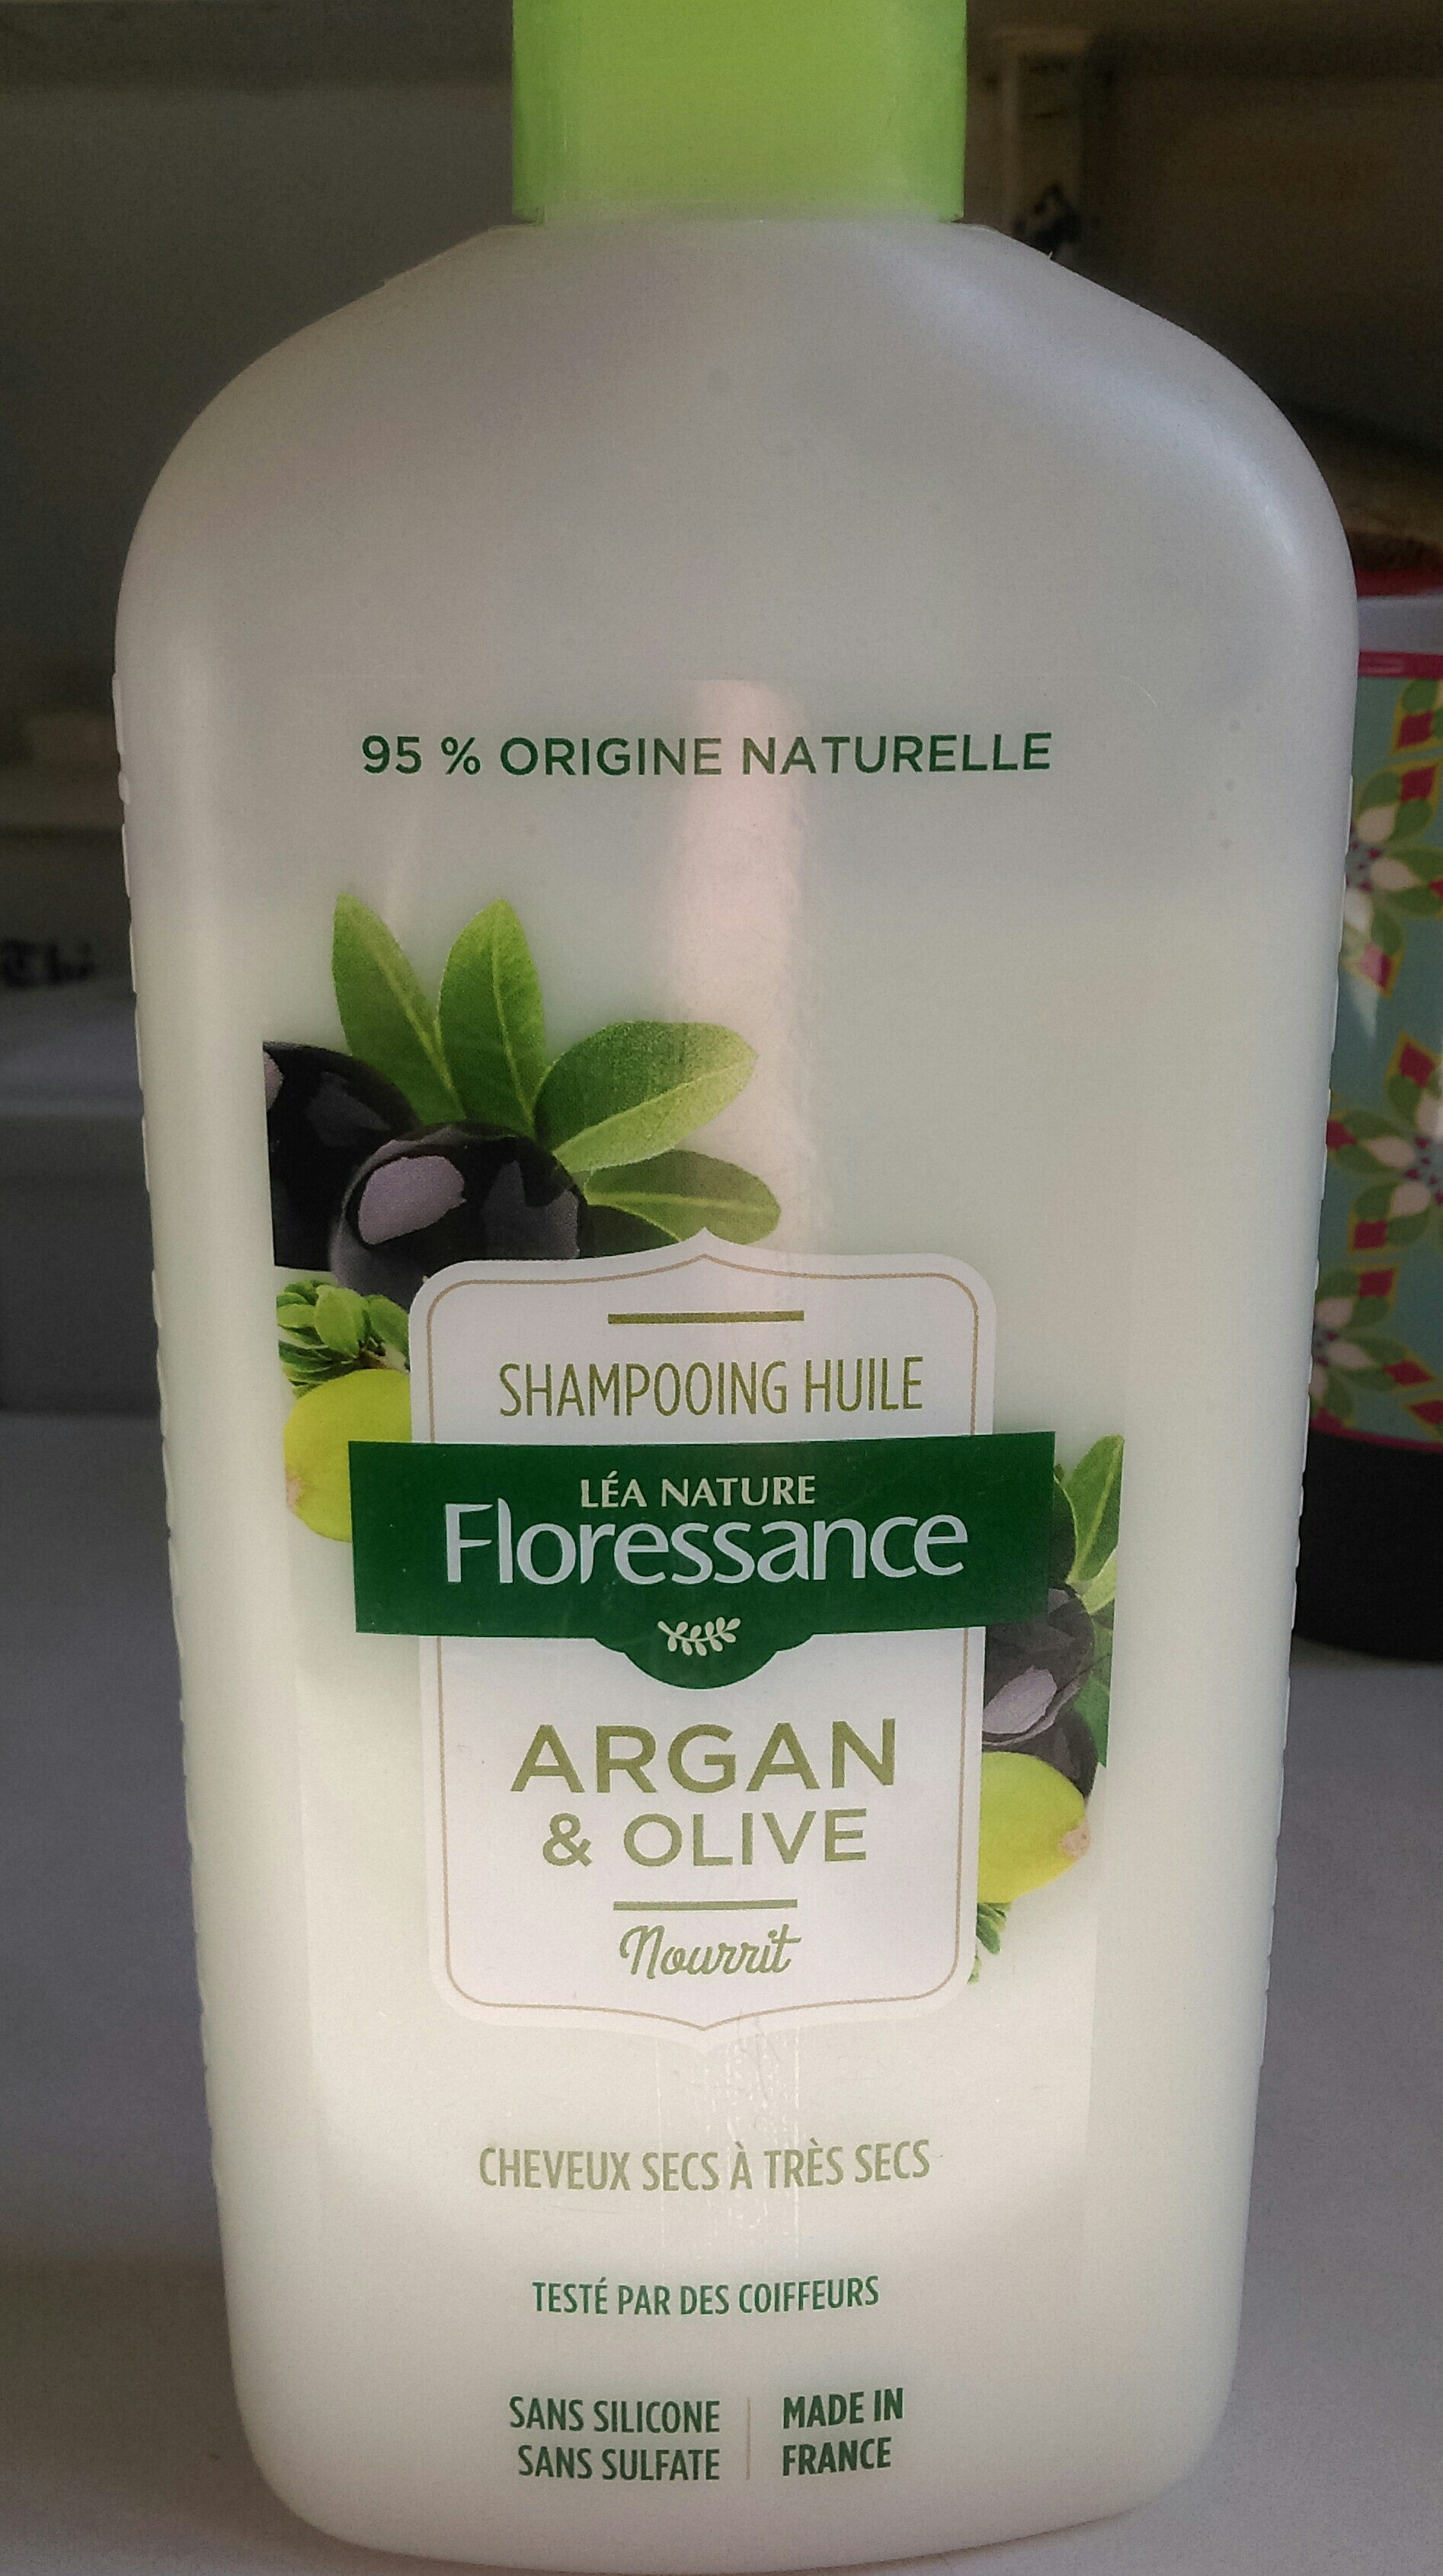 Shampooing huile Argan & olive - Product - fr